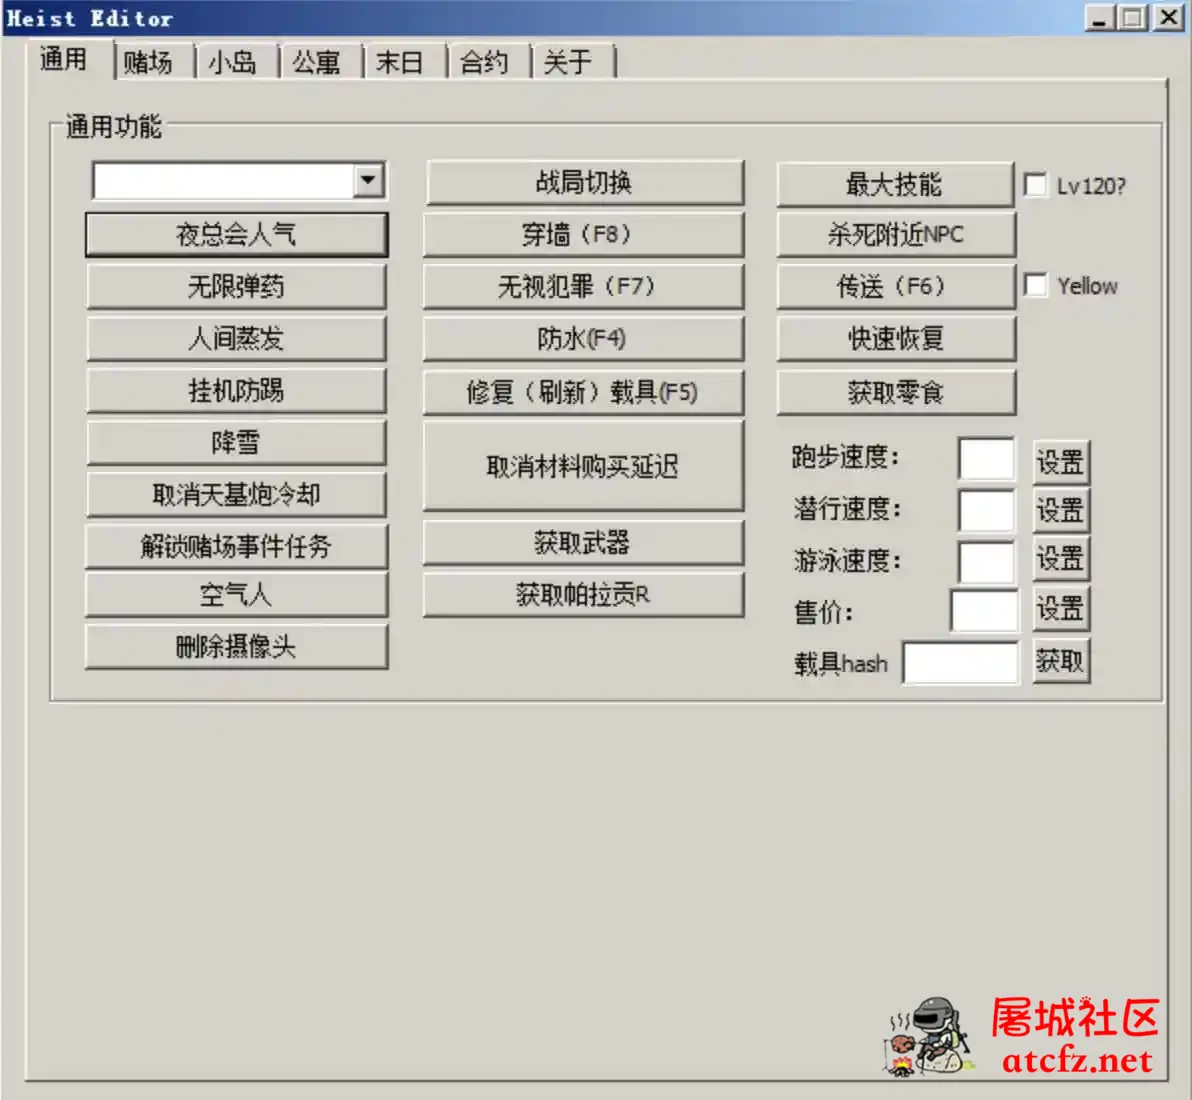 GTA5 Heist Editor外部抢劫编辑器 v3.5.7 屠城辅助网www.tcfz1.com5470